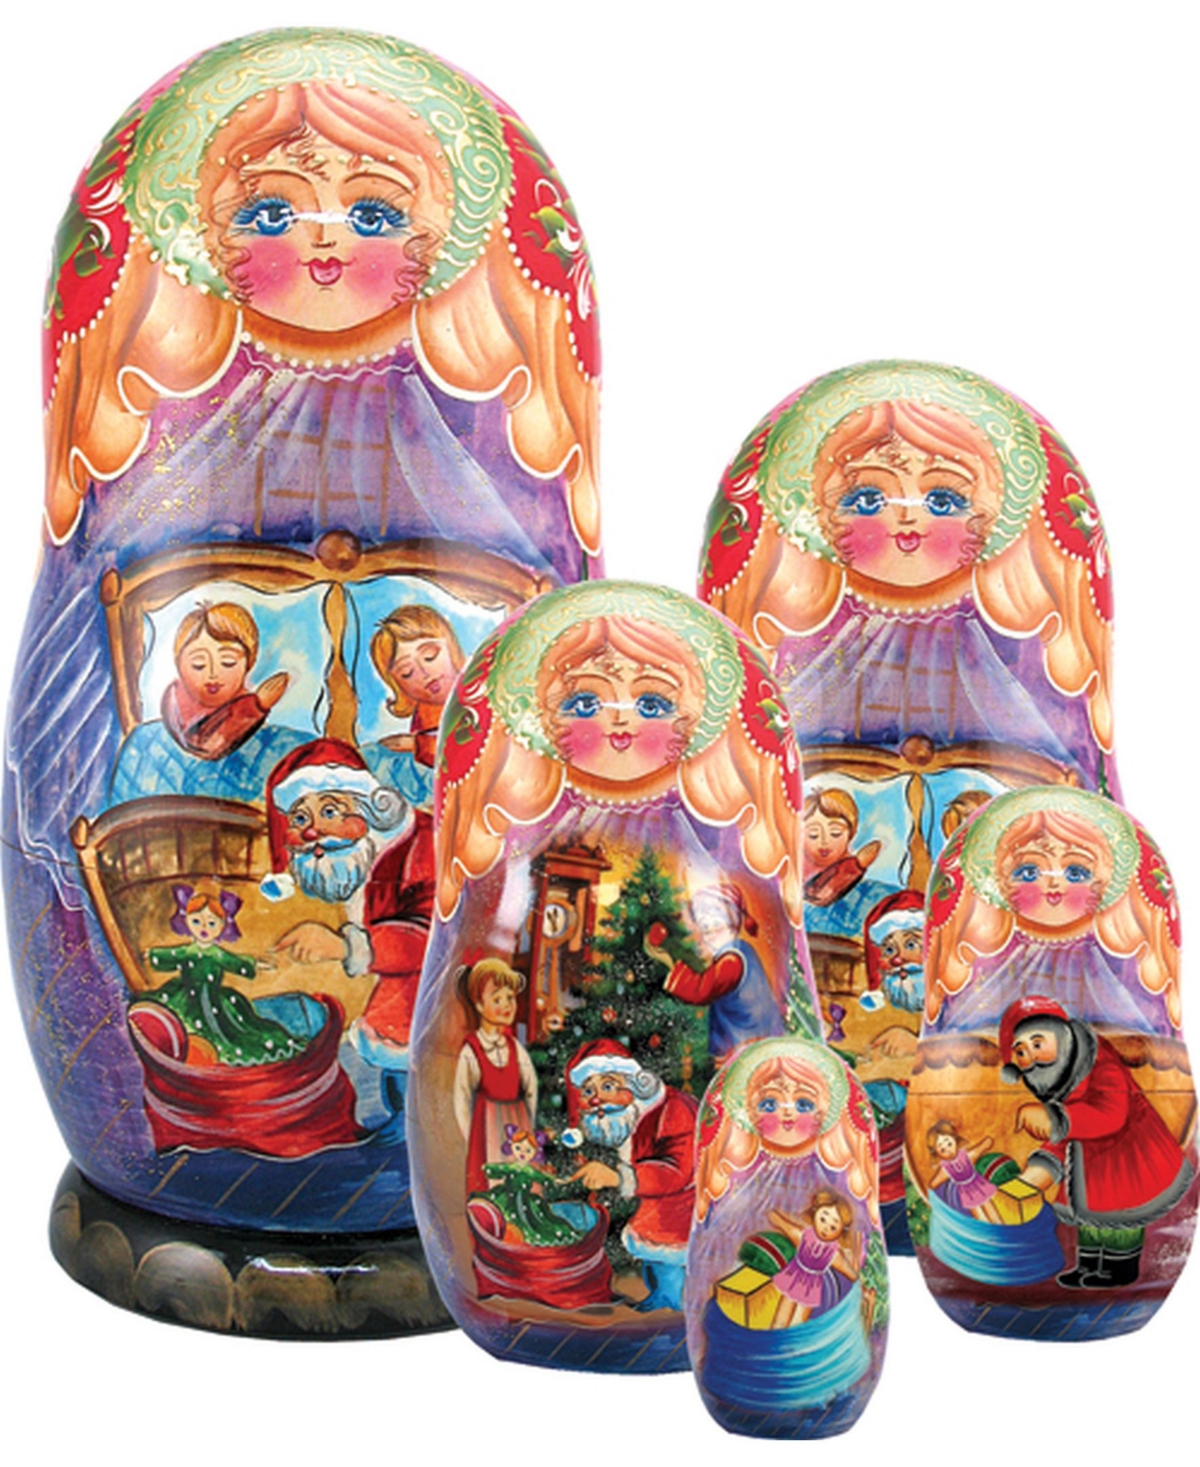 5 Piece Night Before Christmas Russian Matryoshka Nested Doll Set - Multi